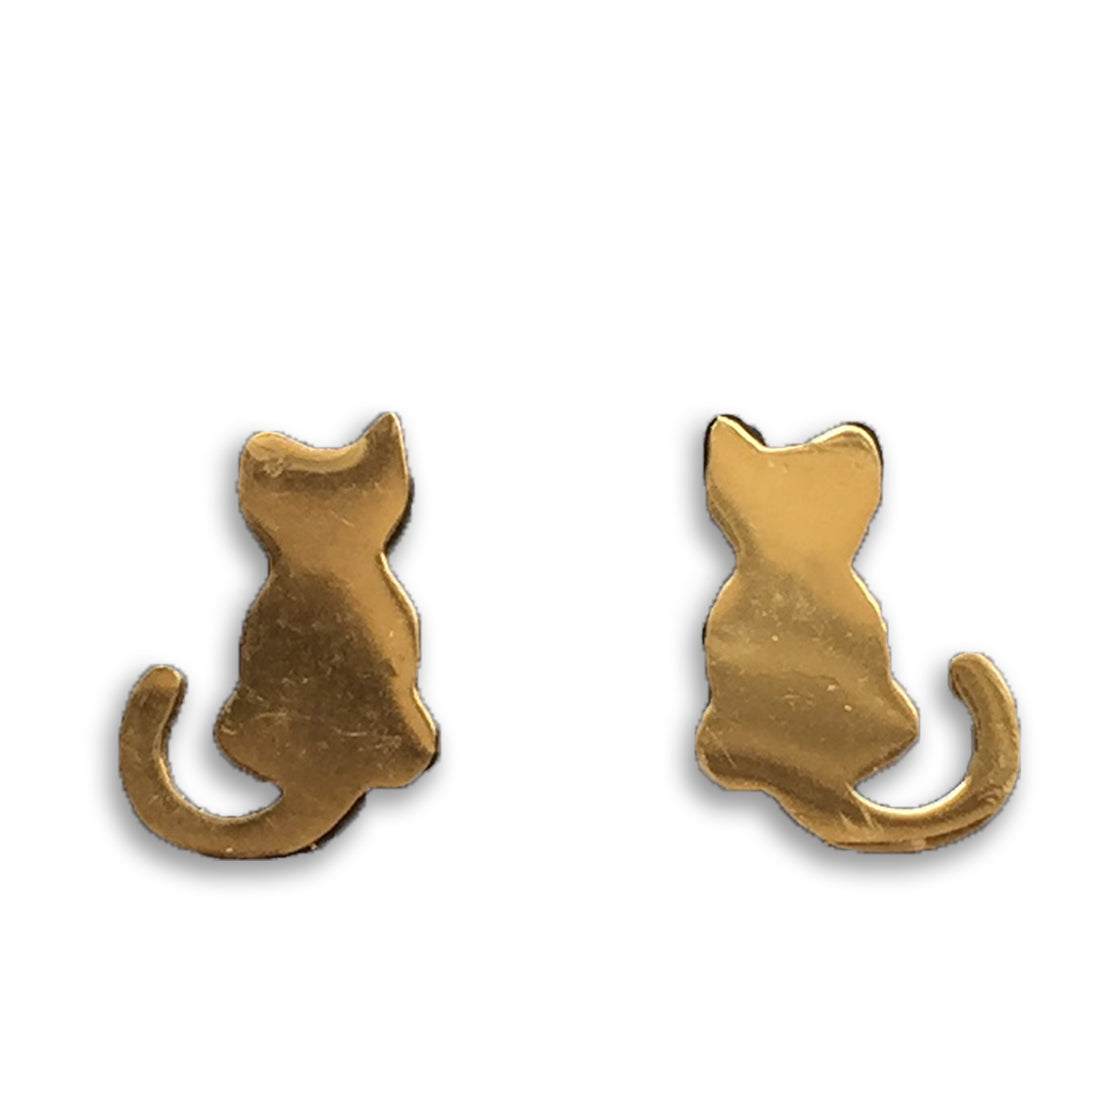 Solid Cat Earrings - Gold